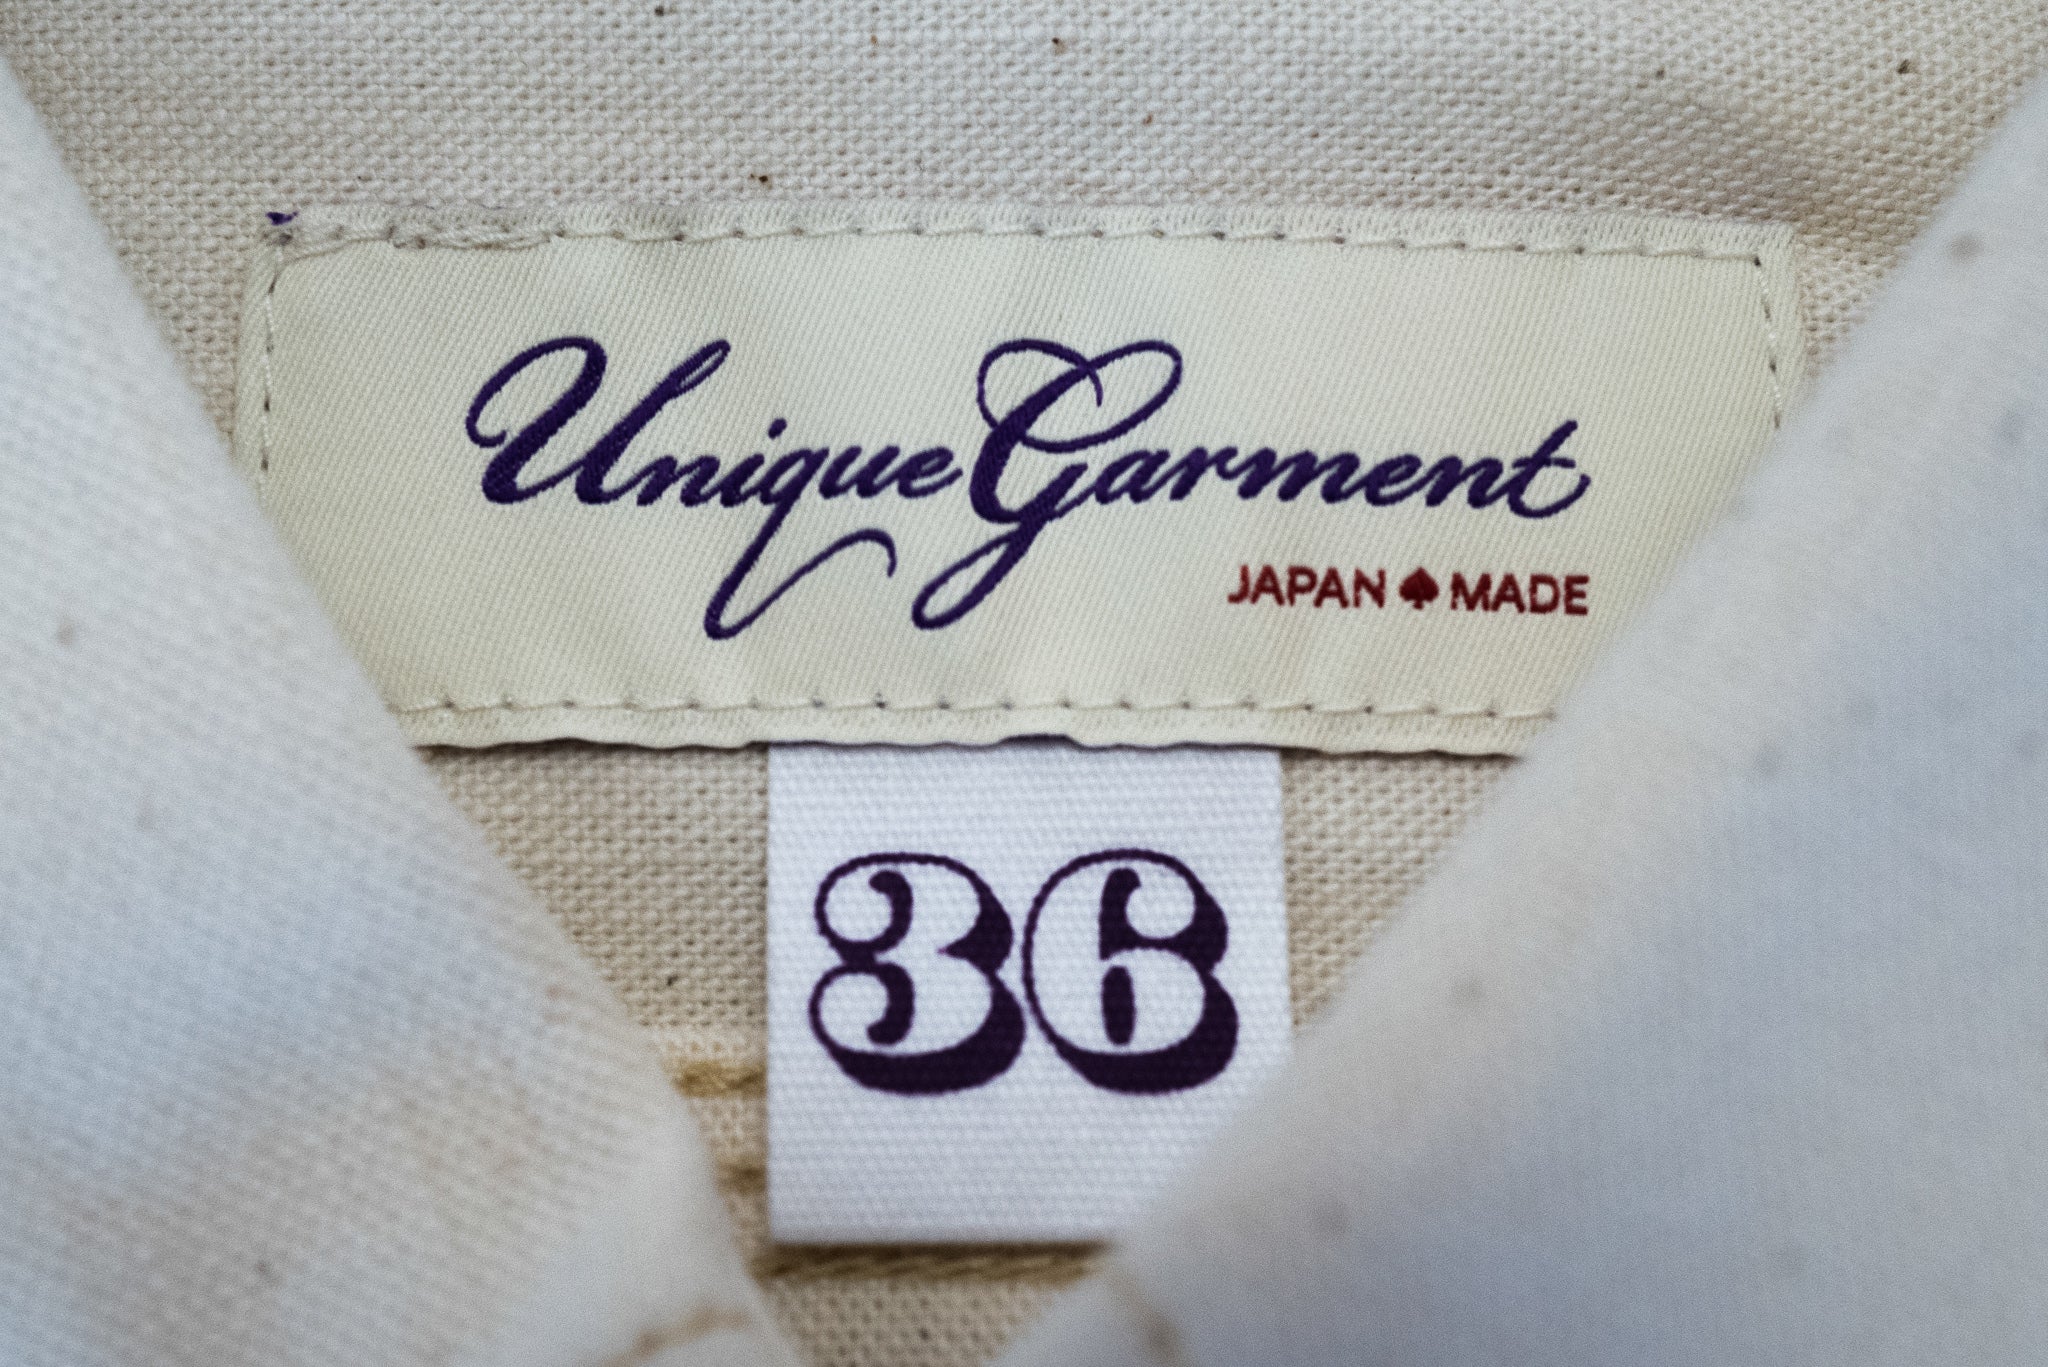 9OZ 'STANLEY' SELVAGE CHAMBRAY WORK SHIRT (CREAM) – Unique Garment